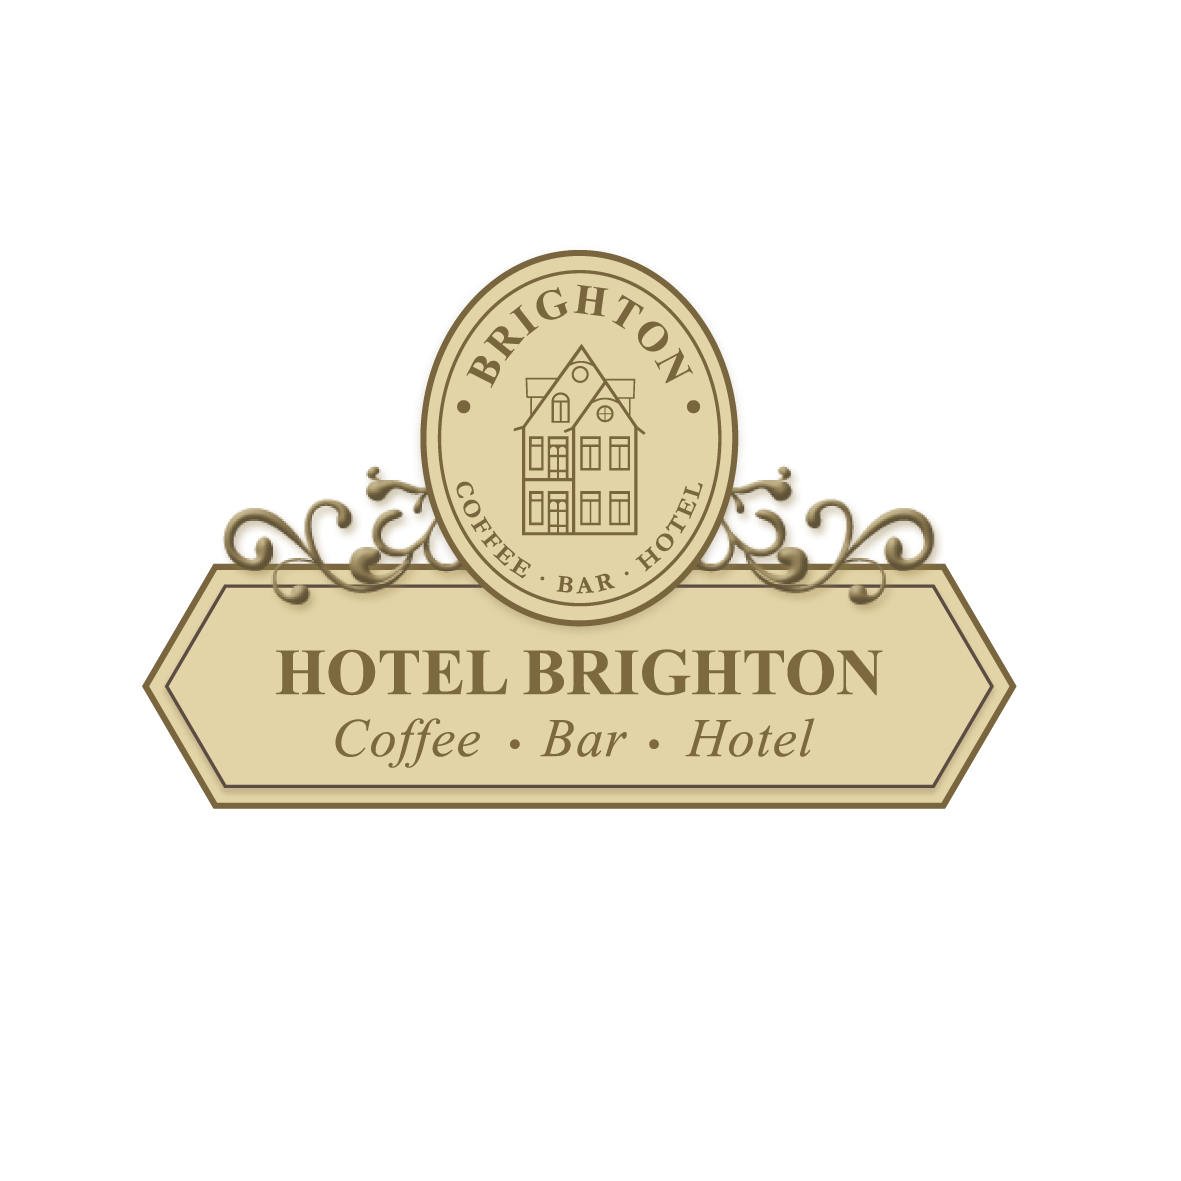 Hotel Brighton